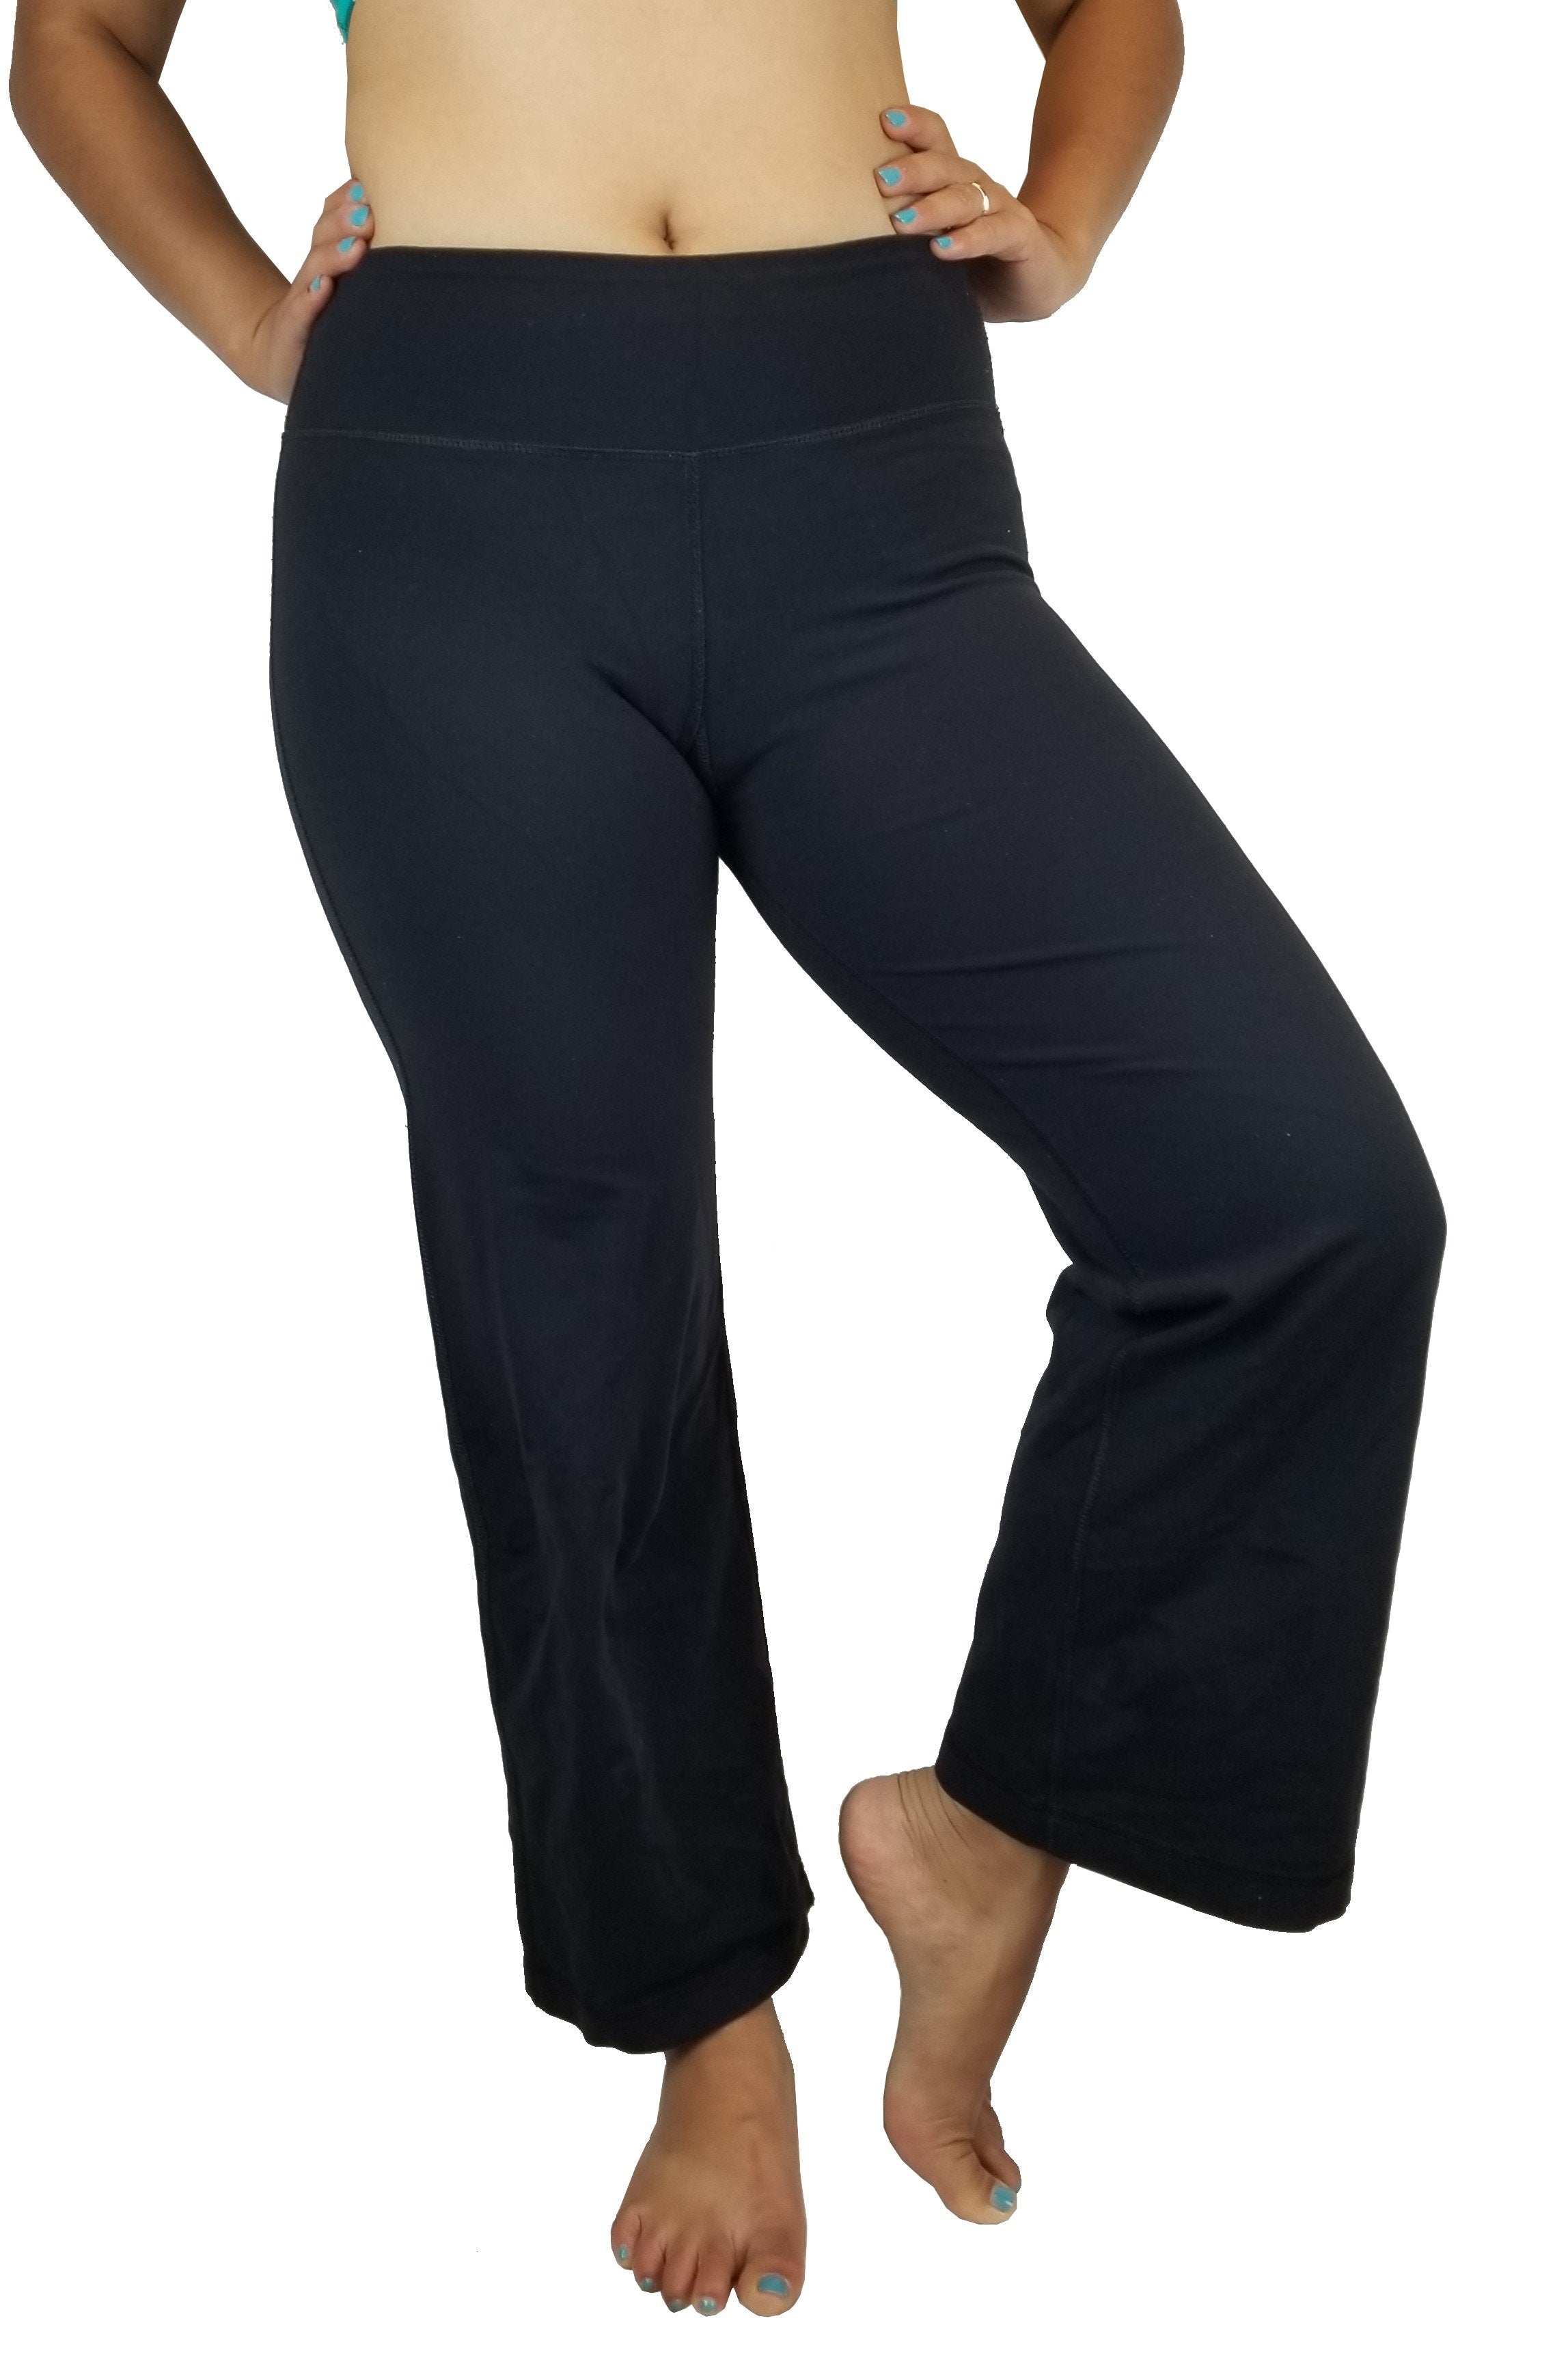 Women's Black Yoga Pants